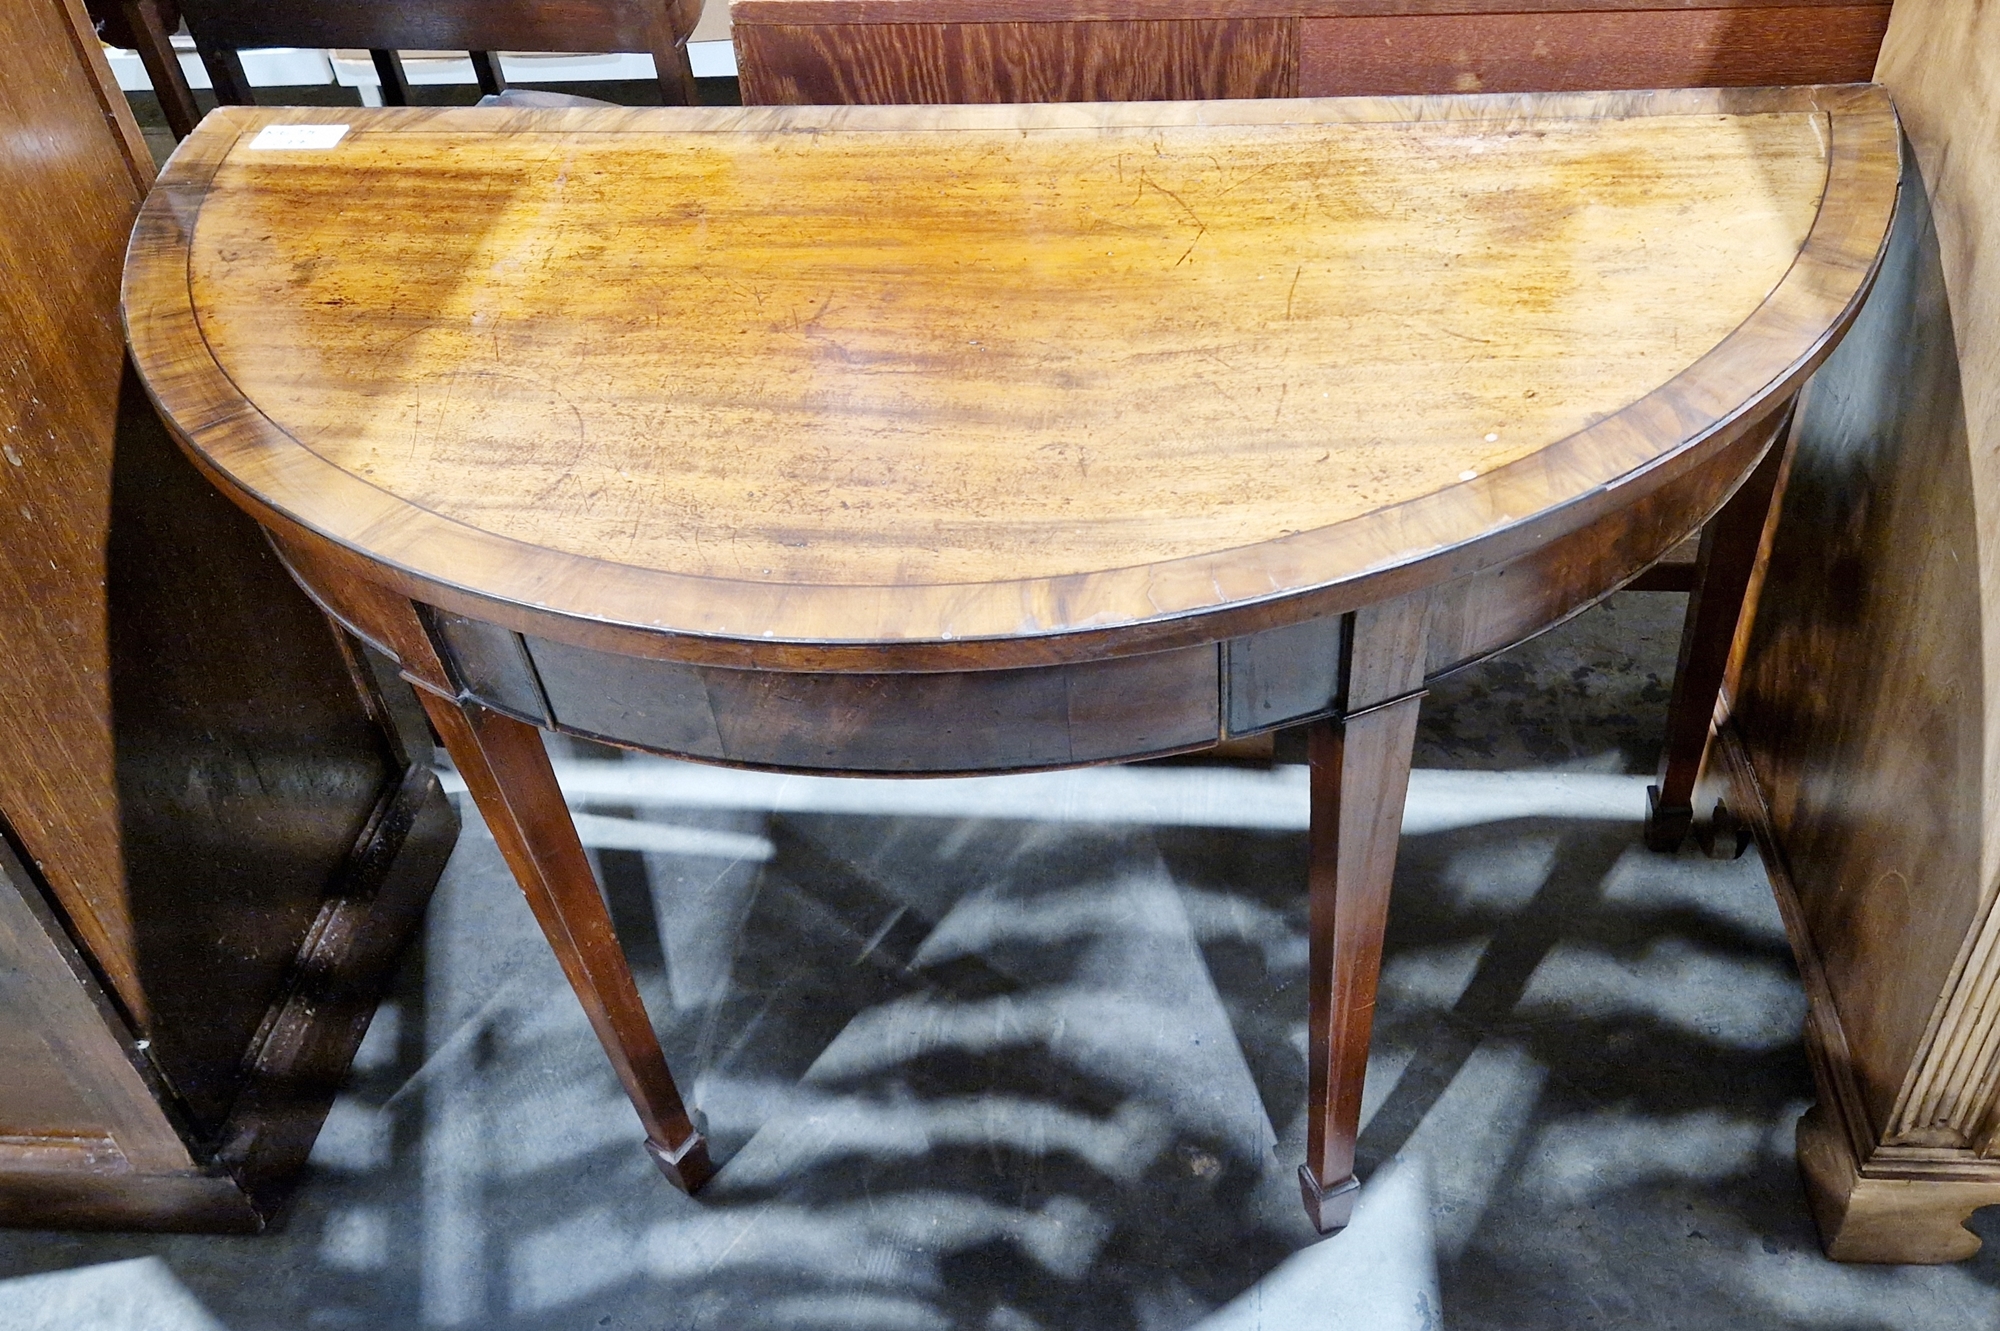 Victorian mahogany demi-lune hall table with ebony stringing, 72cm high x 121cm wide x 59cm deep